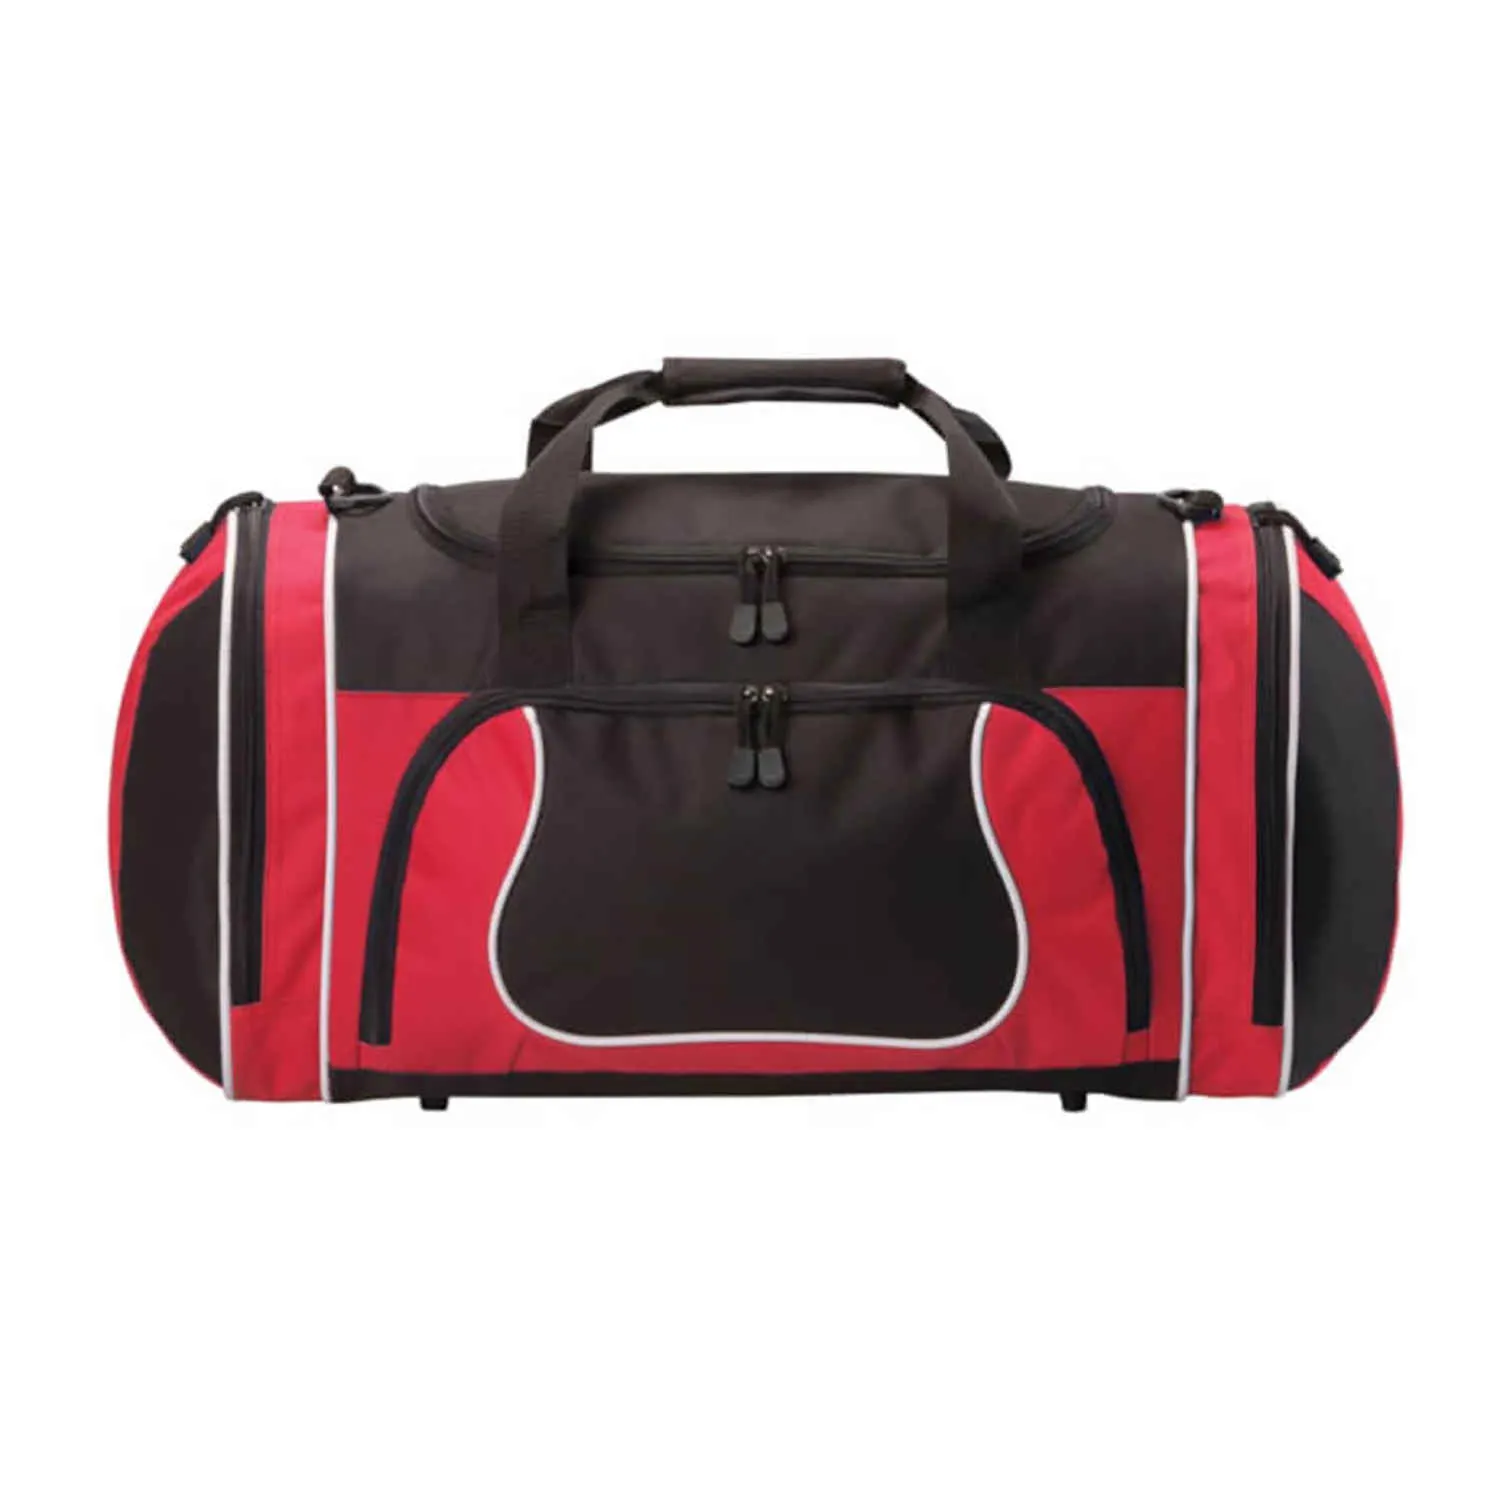 Premium Quality OEM 14" Duffel Bag For Travel Sports Gym Portable Lightweight Shoulder Pack